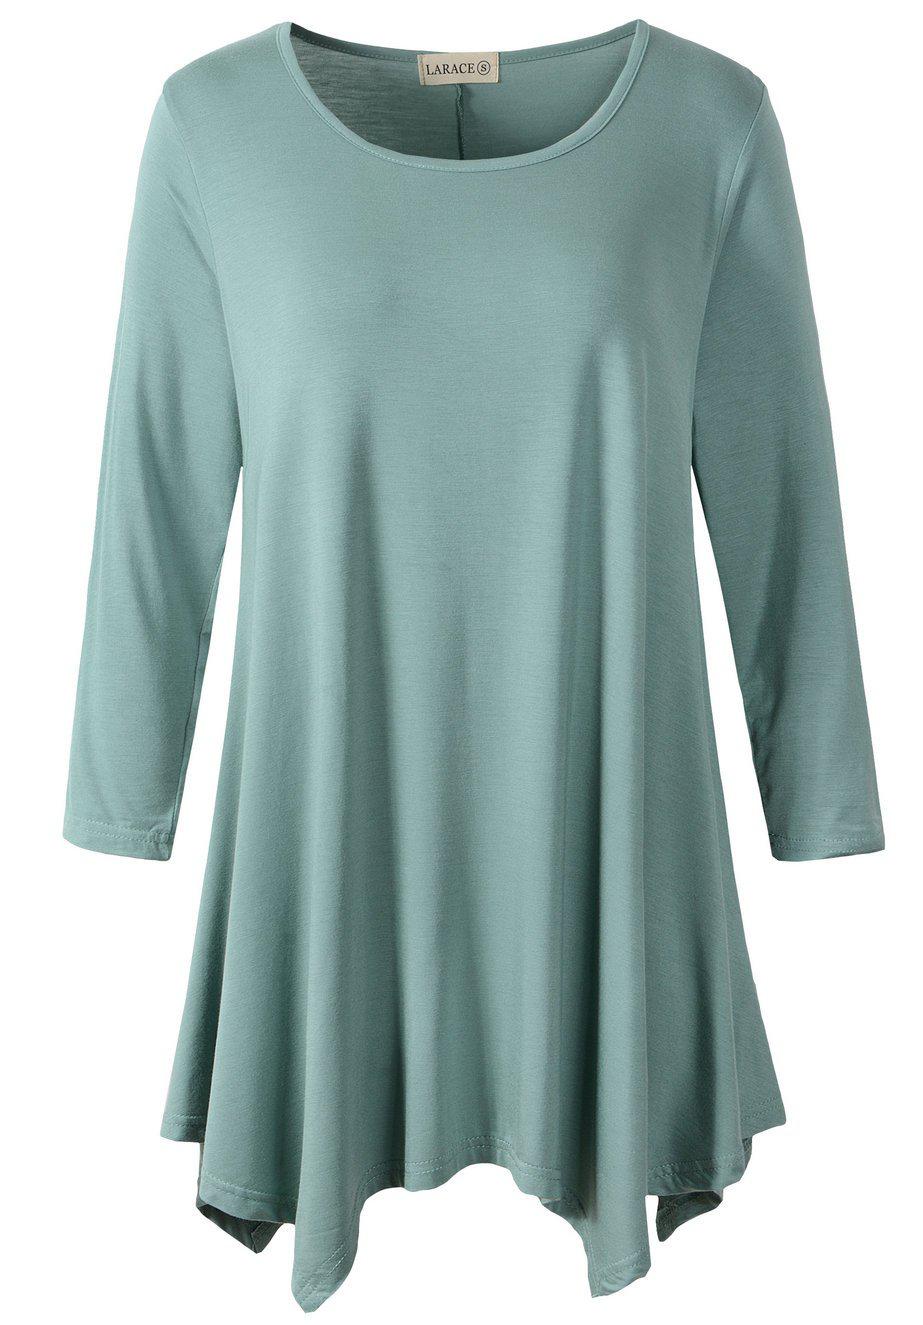 Latest Ladies Fashion Clothes Online,Online Women Clothing Shop & Latest Clothing 3/4 Sleeve Plus Size Tunic Tops Loose Basic Shirt 8028 S-3 XL.